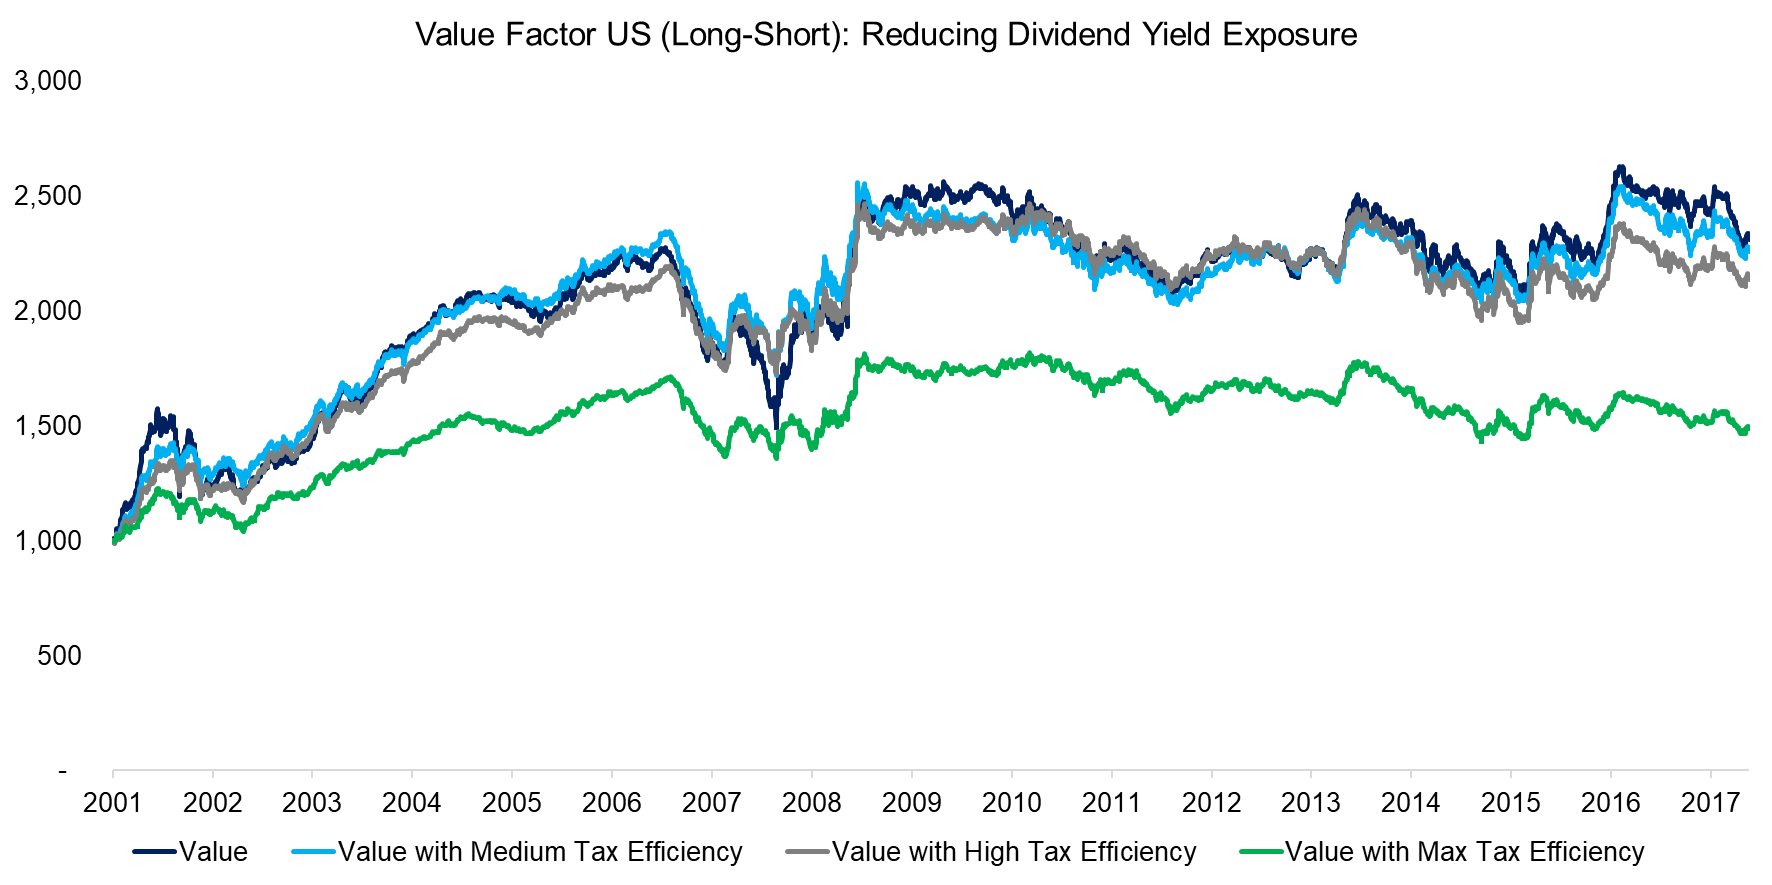 Value Factor US (Long-Short) Reducing Dividend Yield Exposure